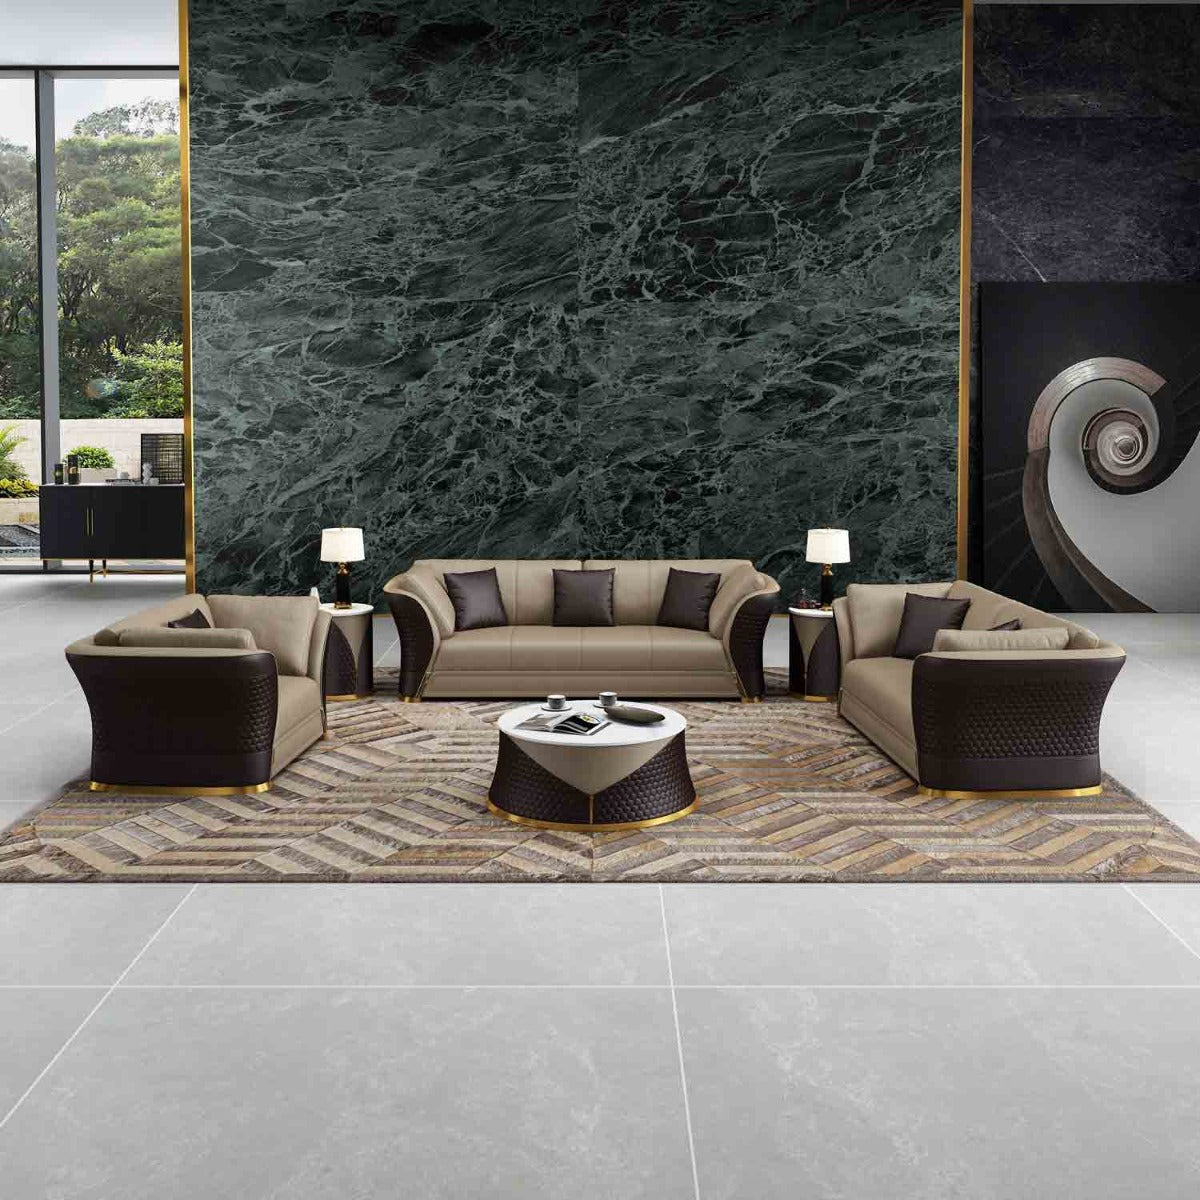 European Furniture - Vogue 3 Piece Living Room Set in Beige-Chocolate - 27990-3SET - New Star Living